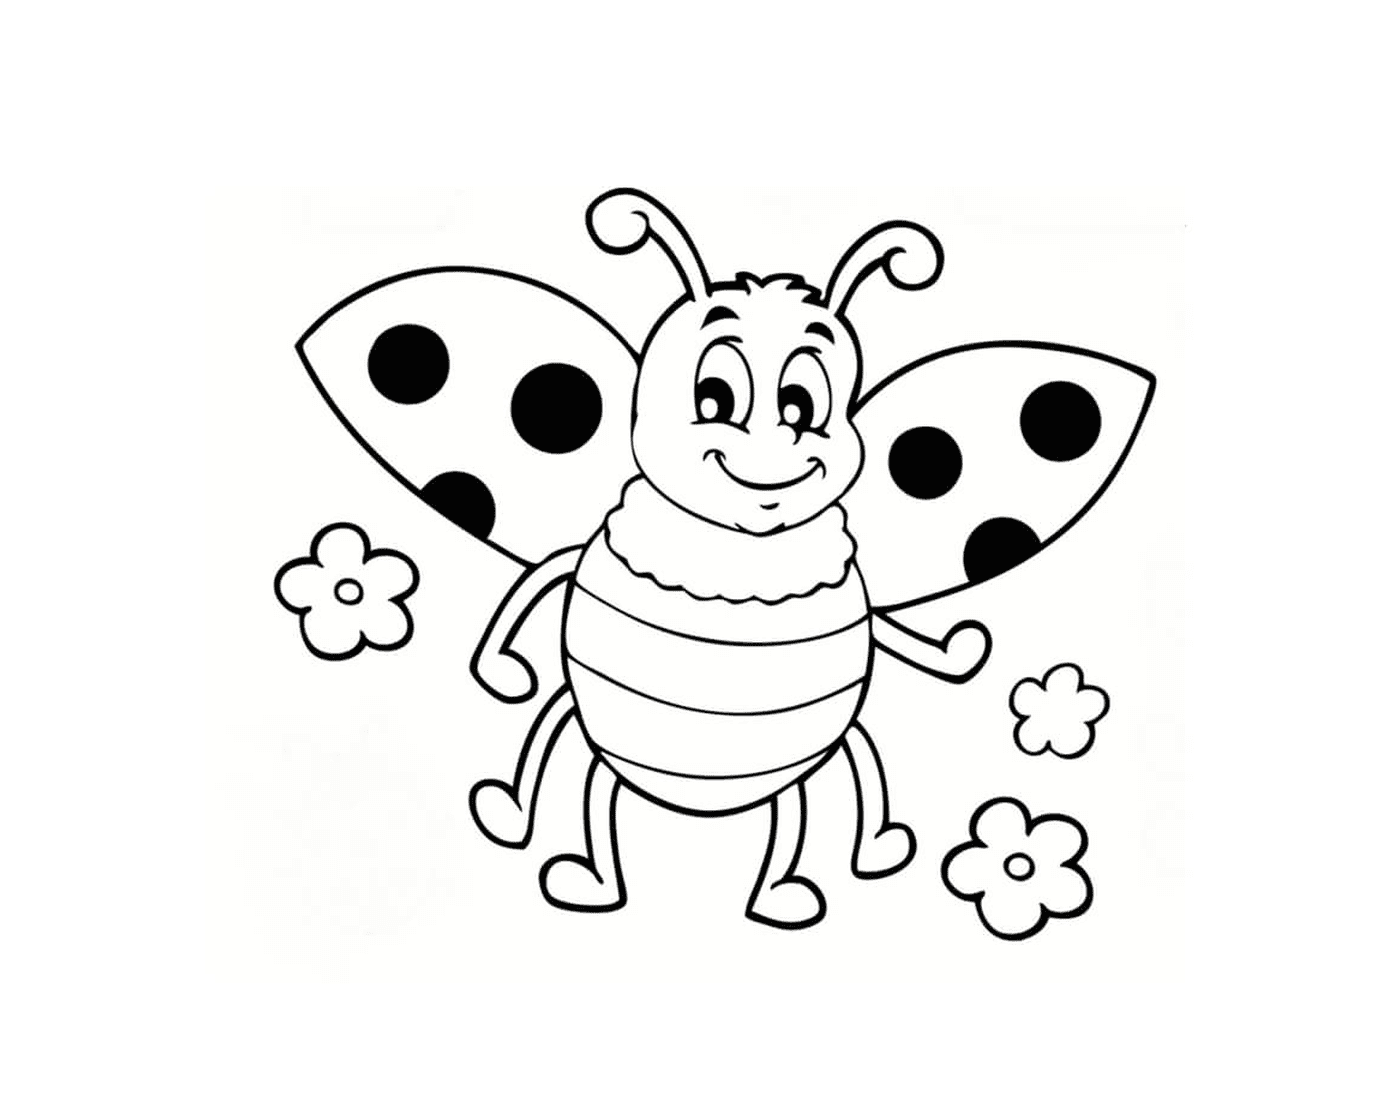  Pretty easy representation of a ladybug for children 